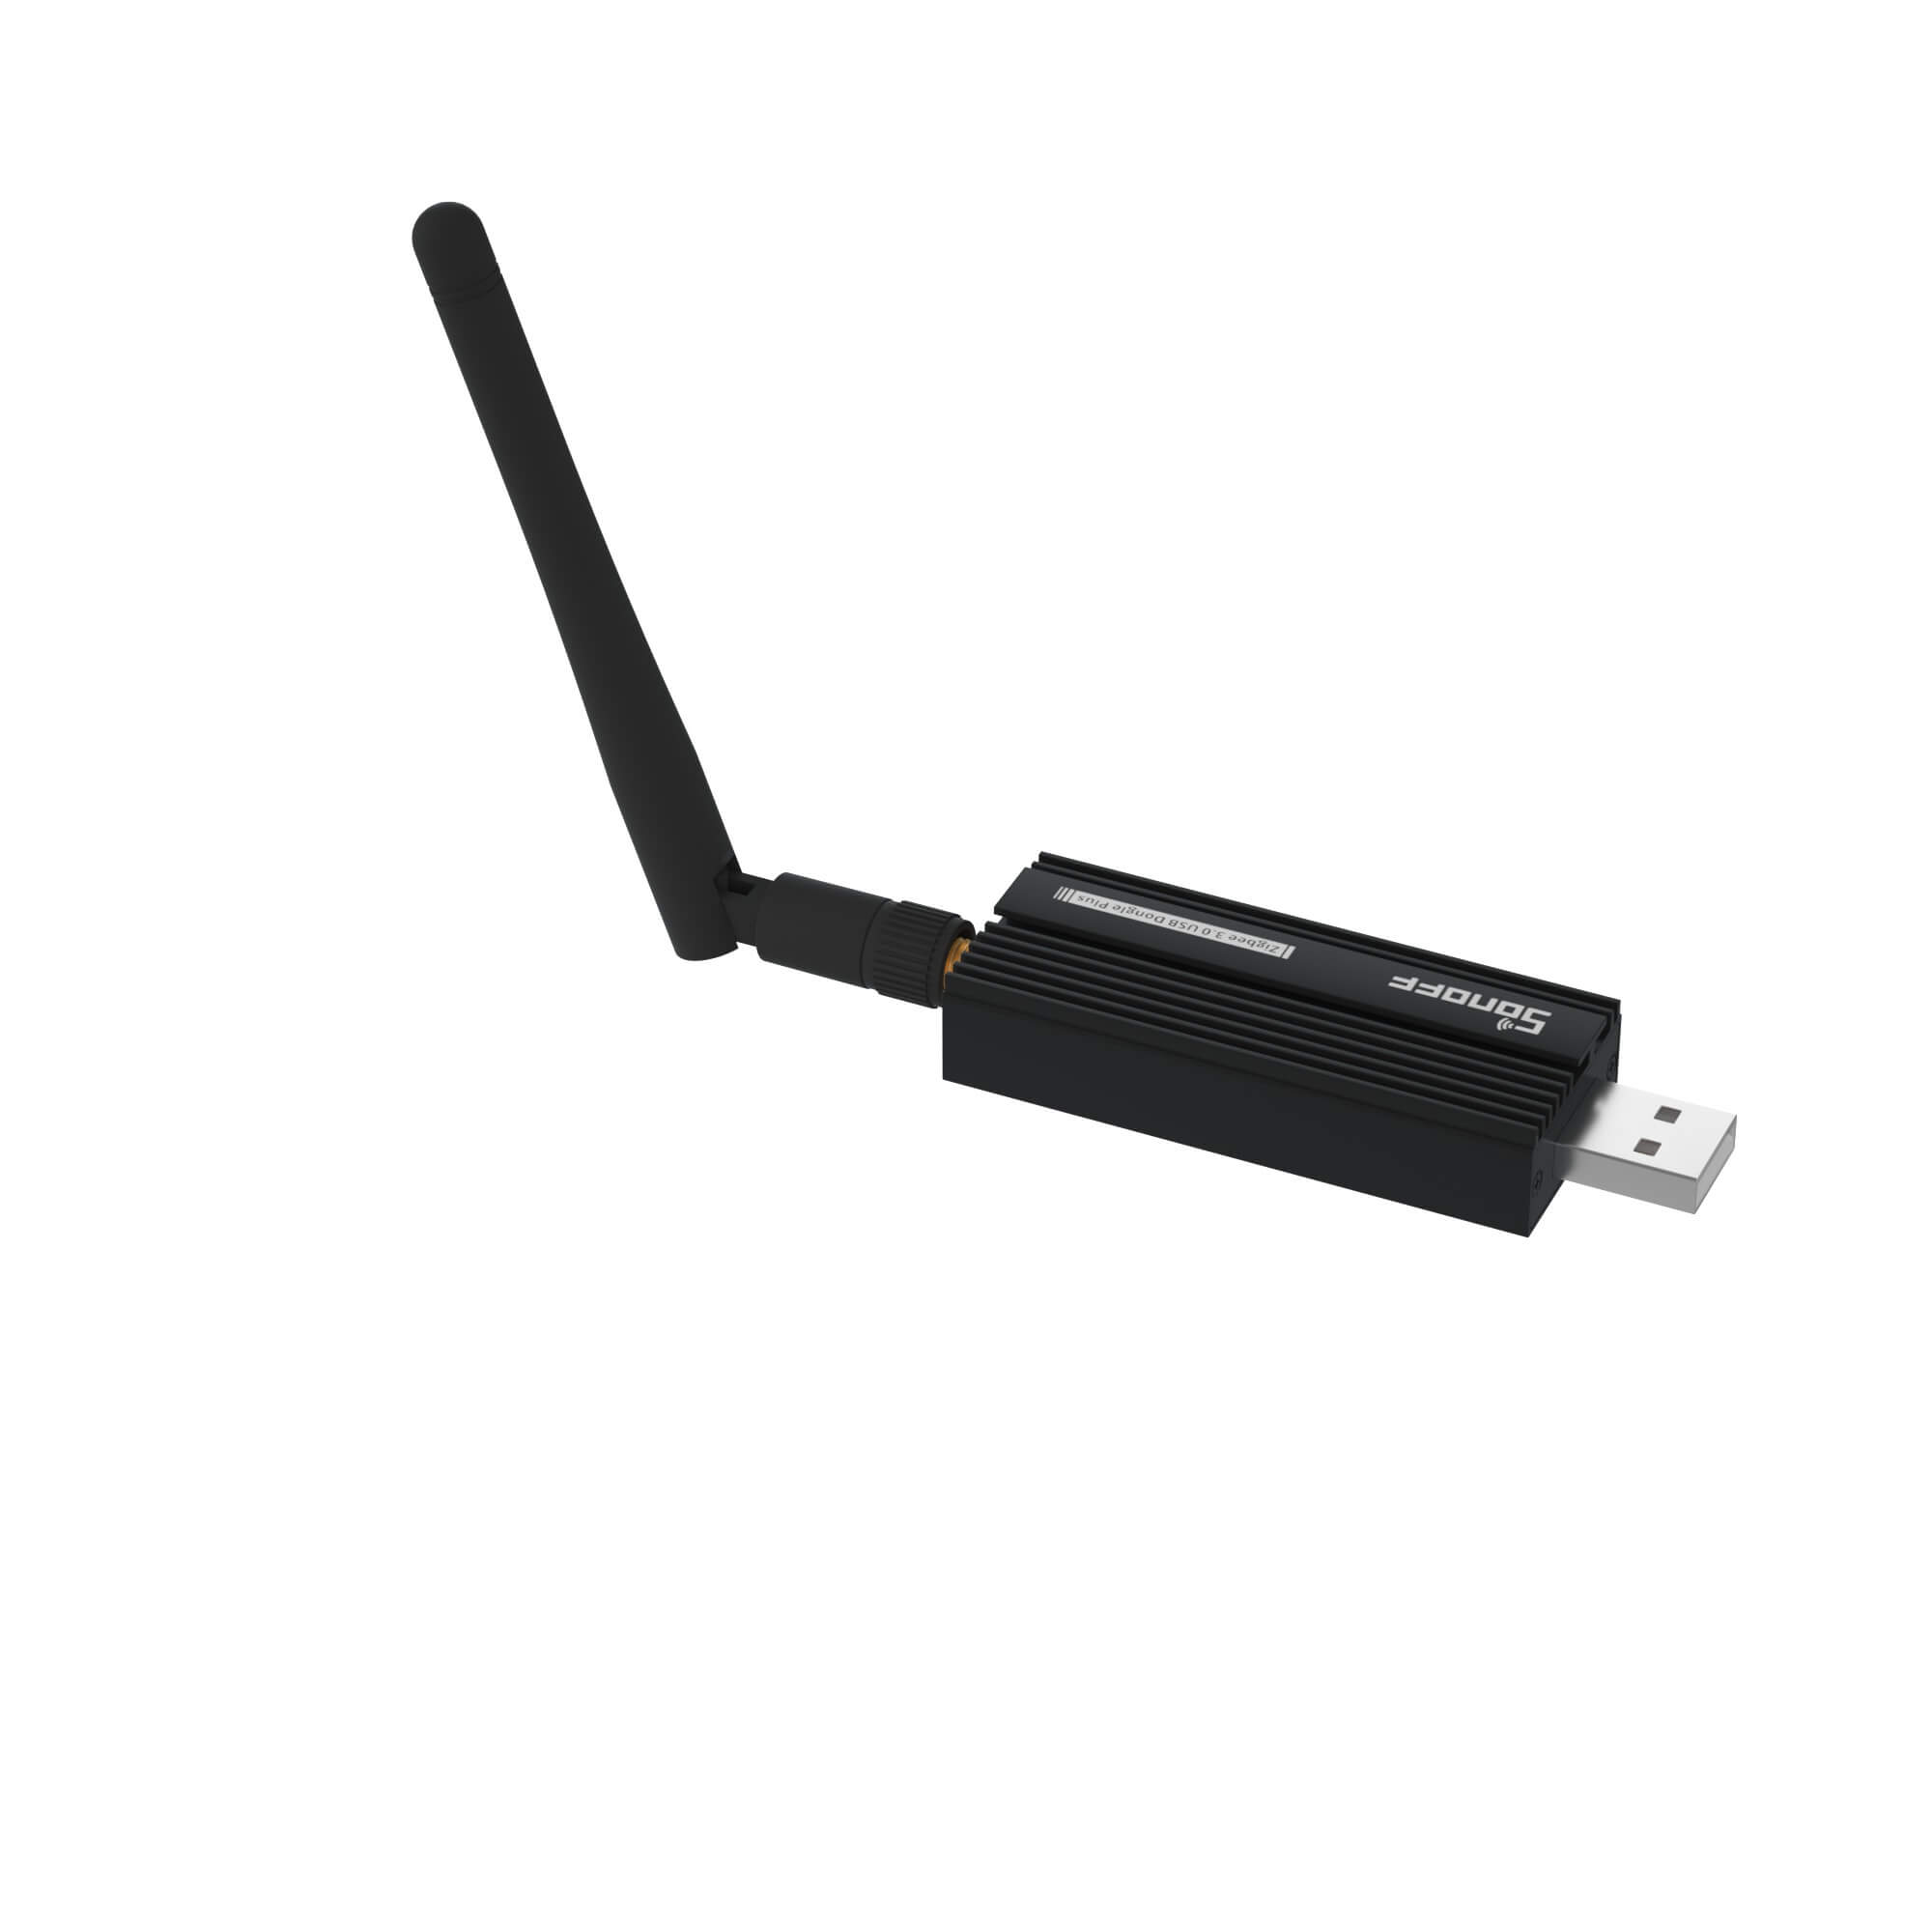 Sonoff Zigbee 3.0 USB Dongle Plus wierdness - Configuration - Home